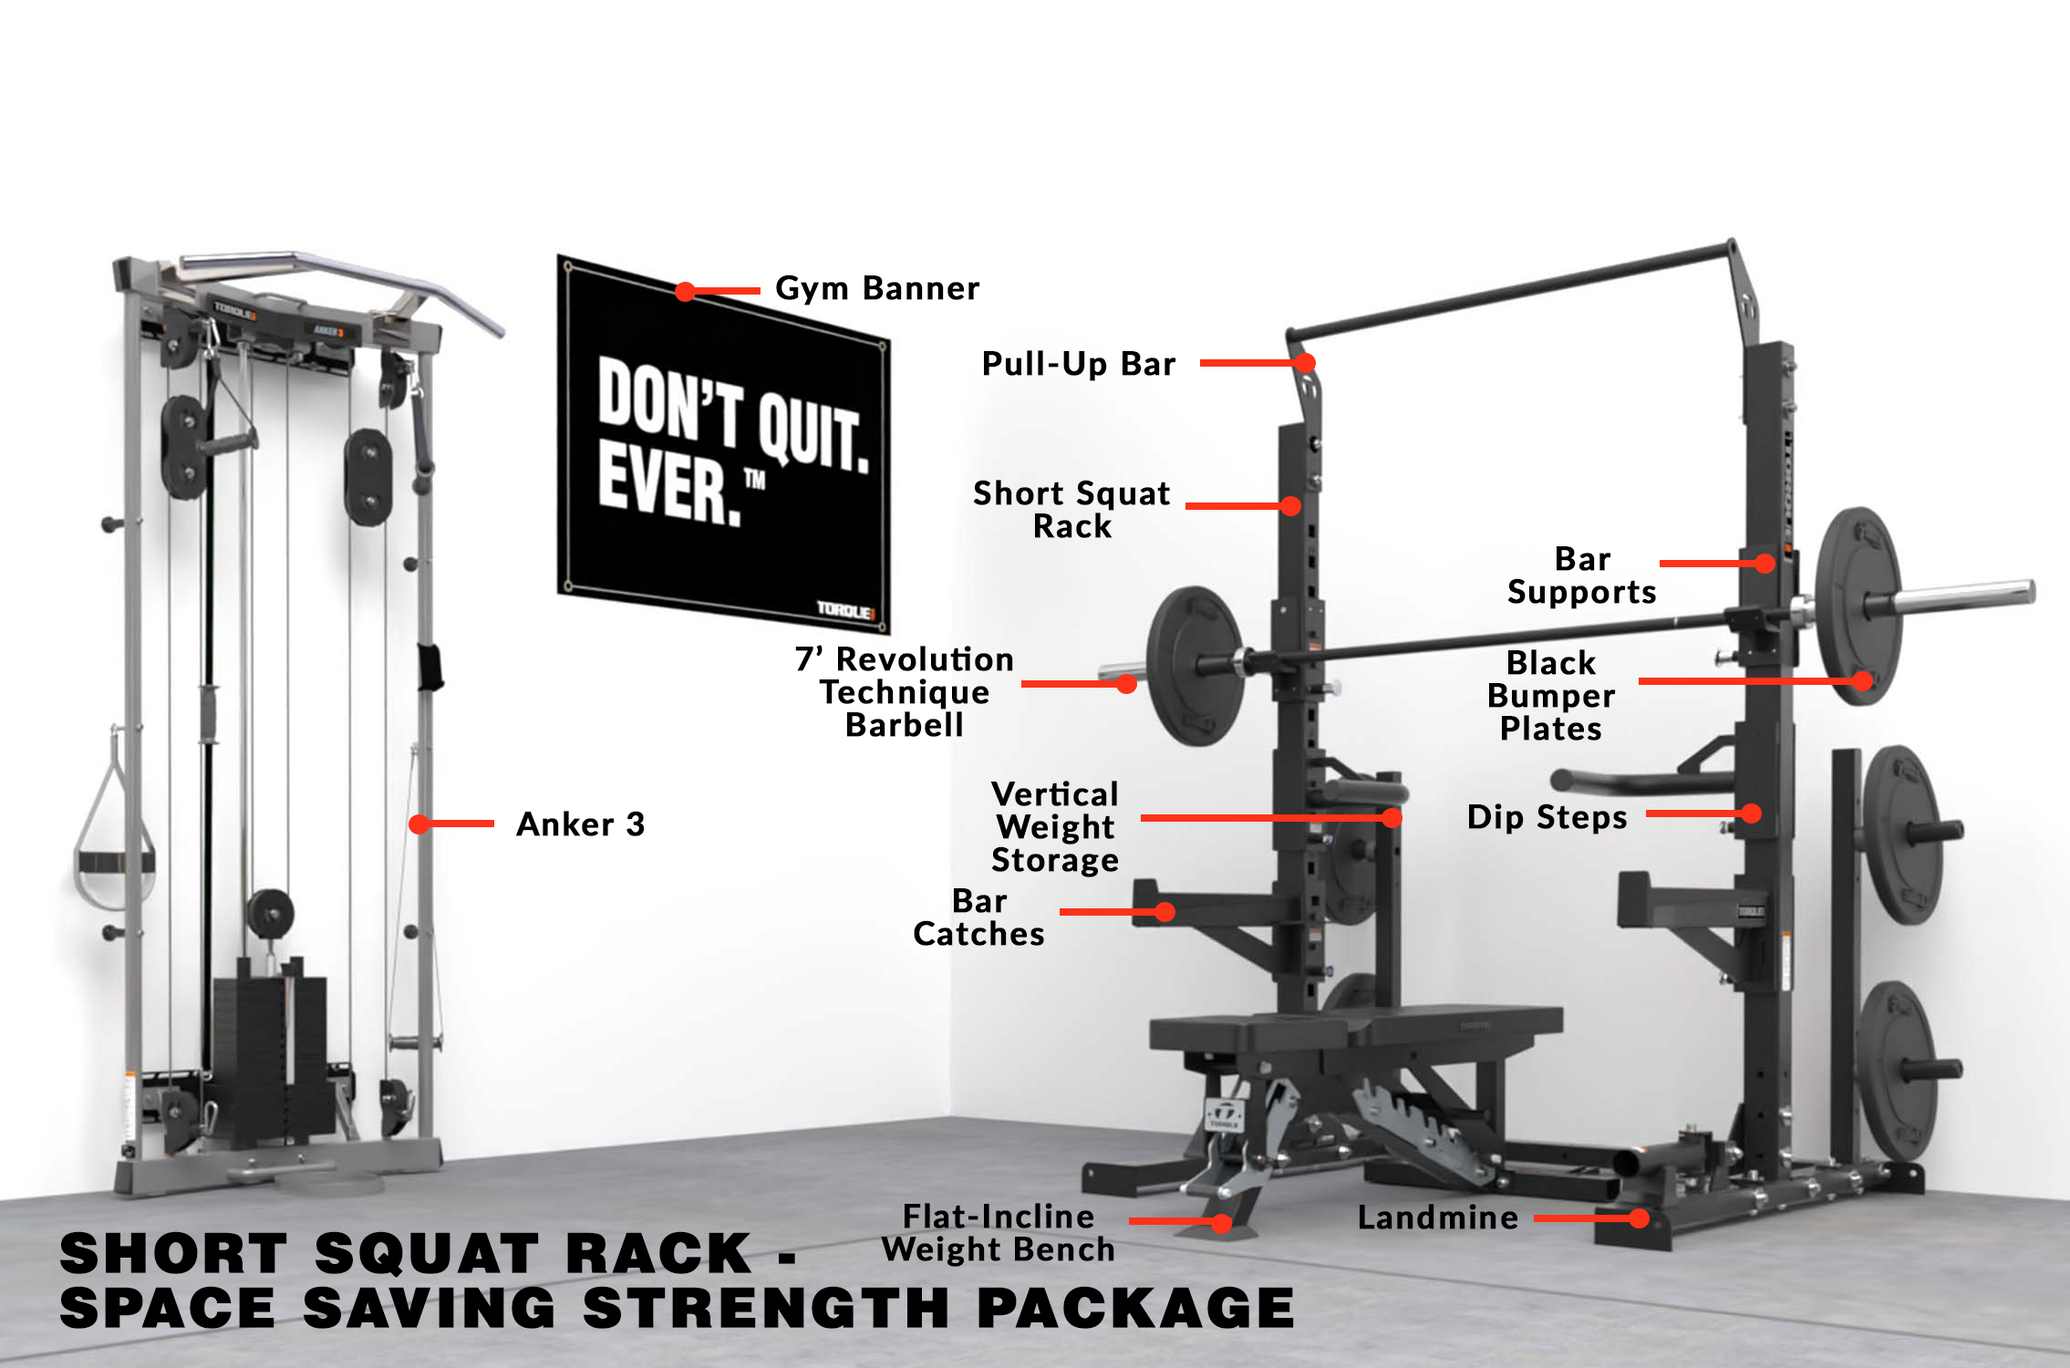 Short Squat Rack - Space Saving Strength Package